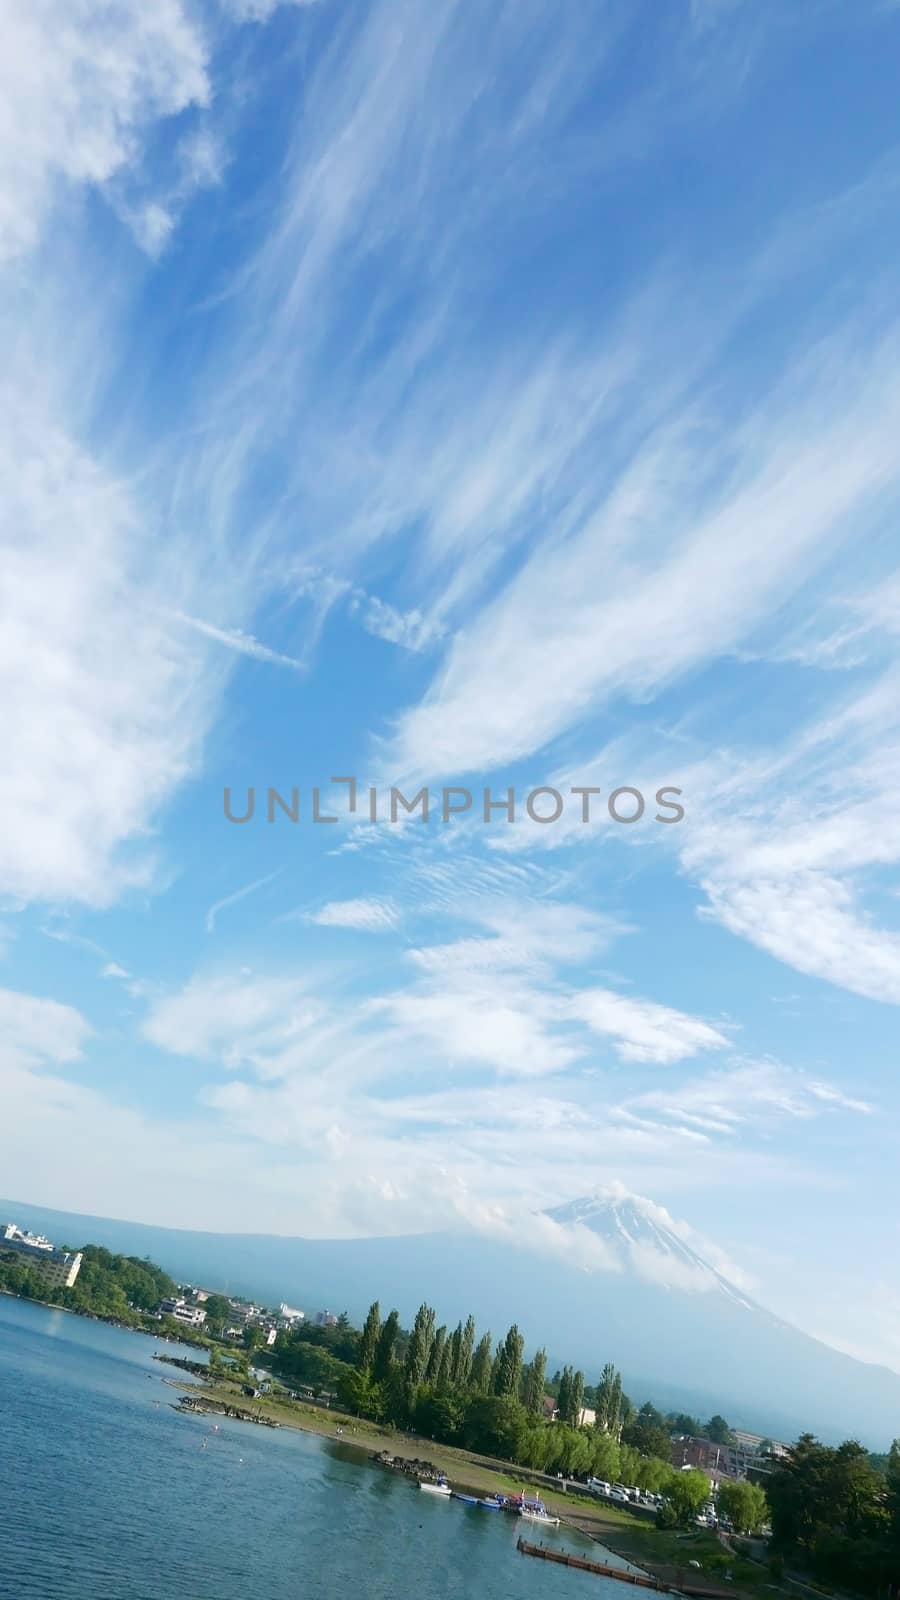 Japan Mt. Fuji Fujiyama Mountain, lake and blue sky with nice clouds